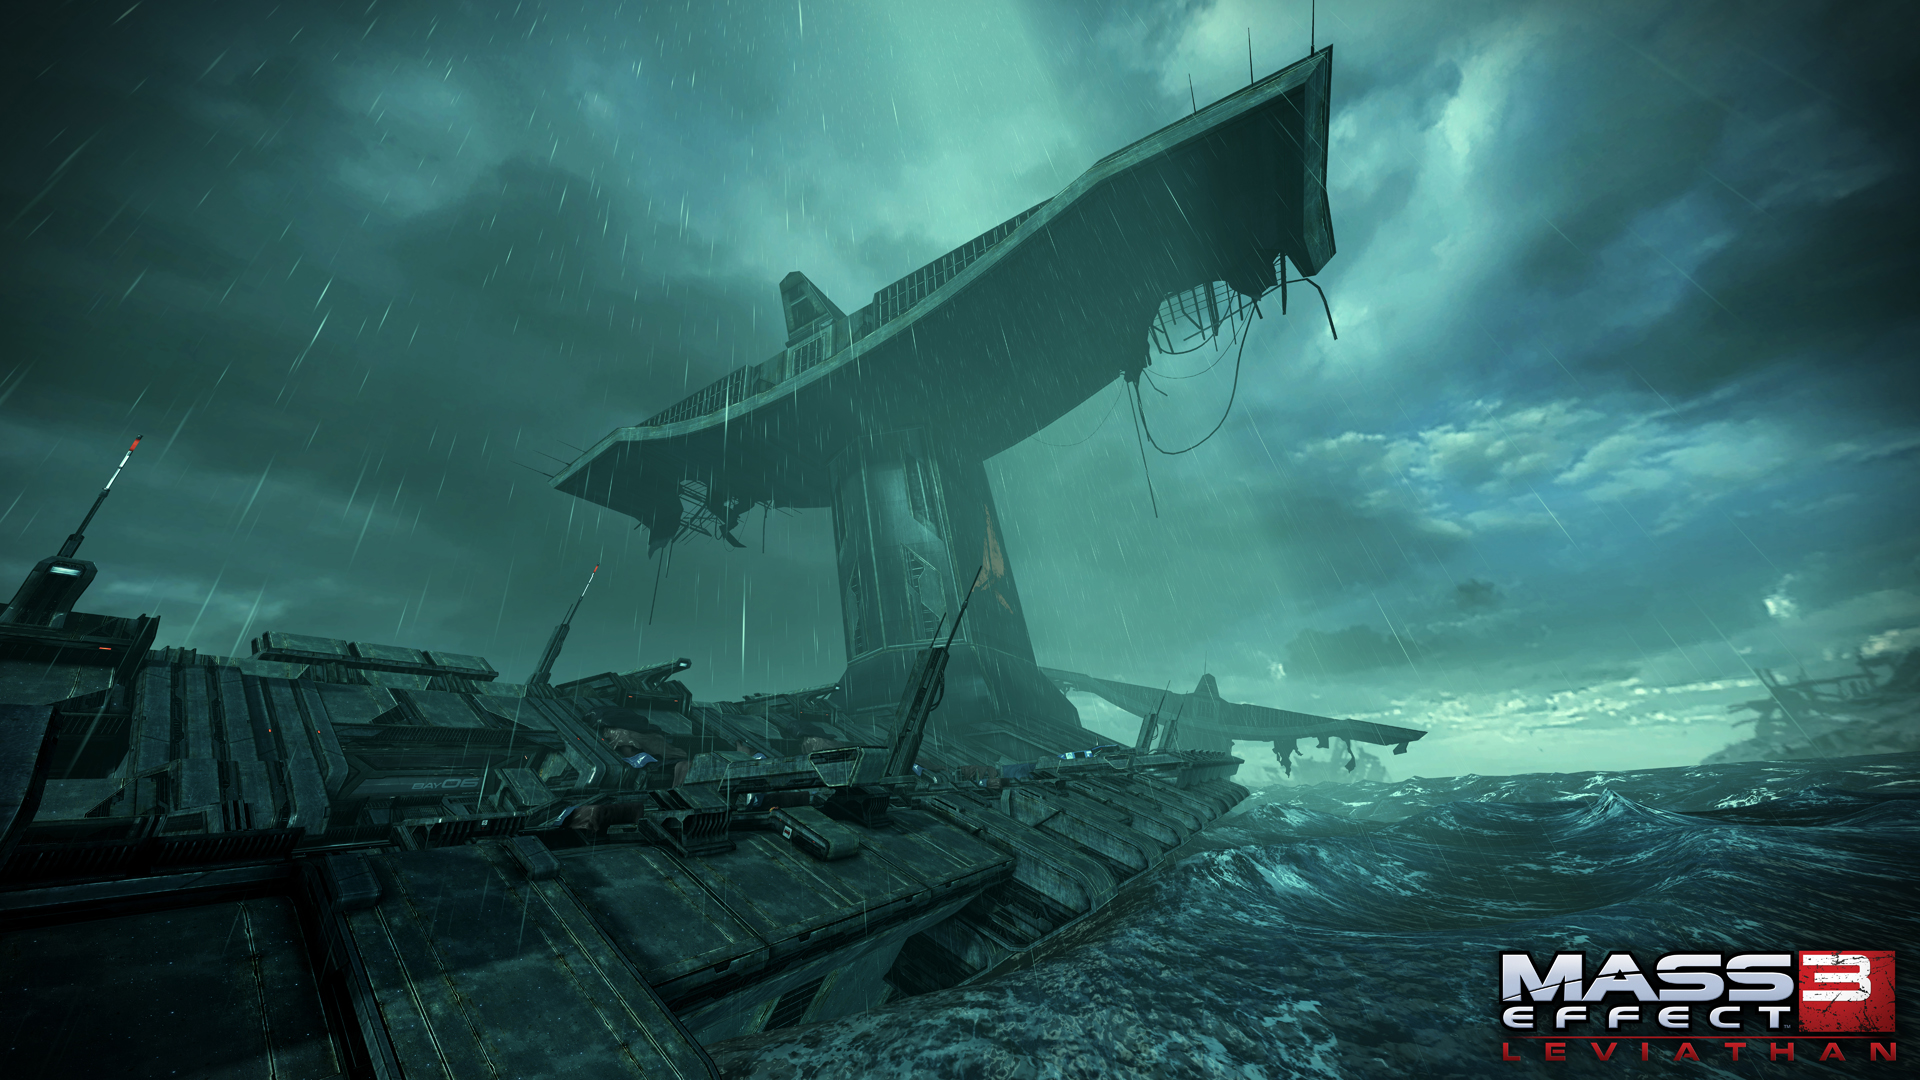 Rusteloosheid Kietelen ik zal sterk zijn Mass Effect 3 Leviathan & Firefight DLC and Wii U information – BioWare Blog